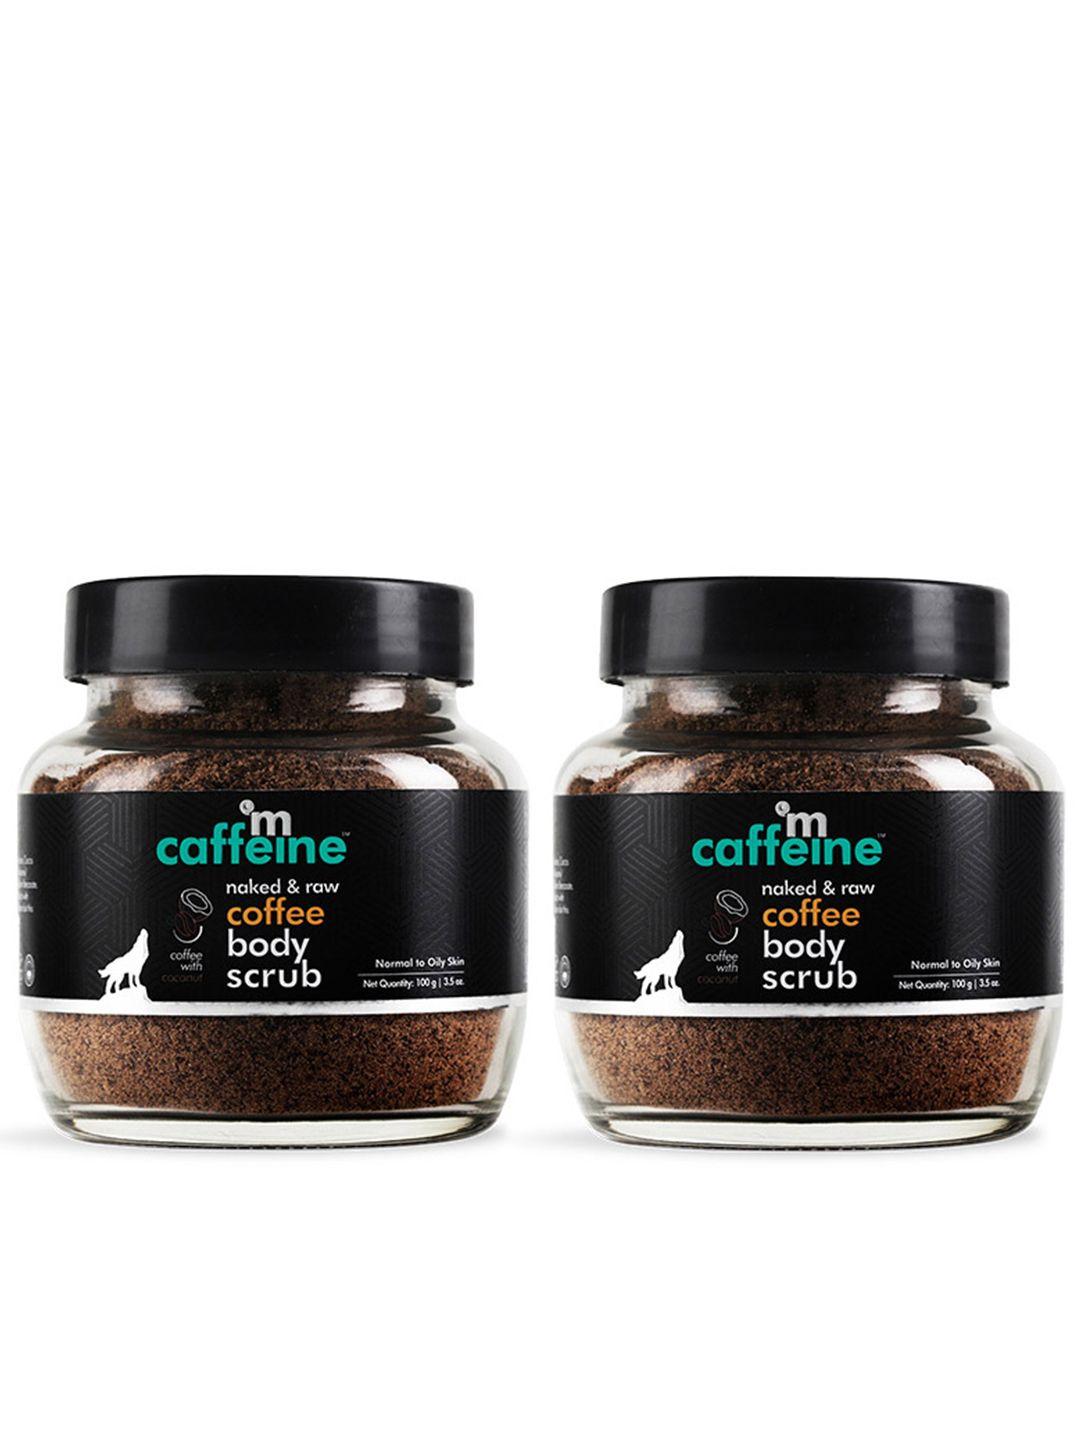 mcaffeine sustainable coffee body scrub - set of 2 100 g each